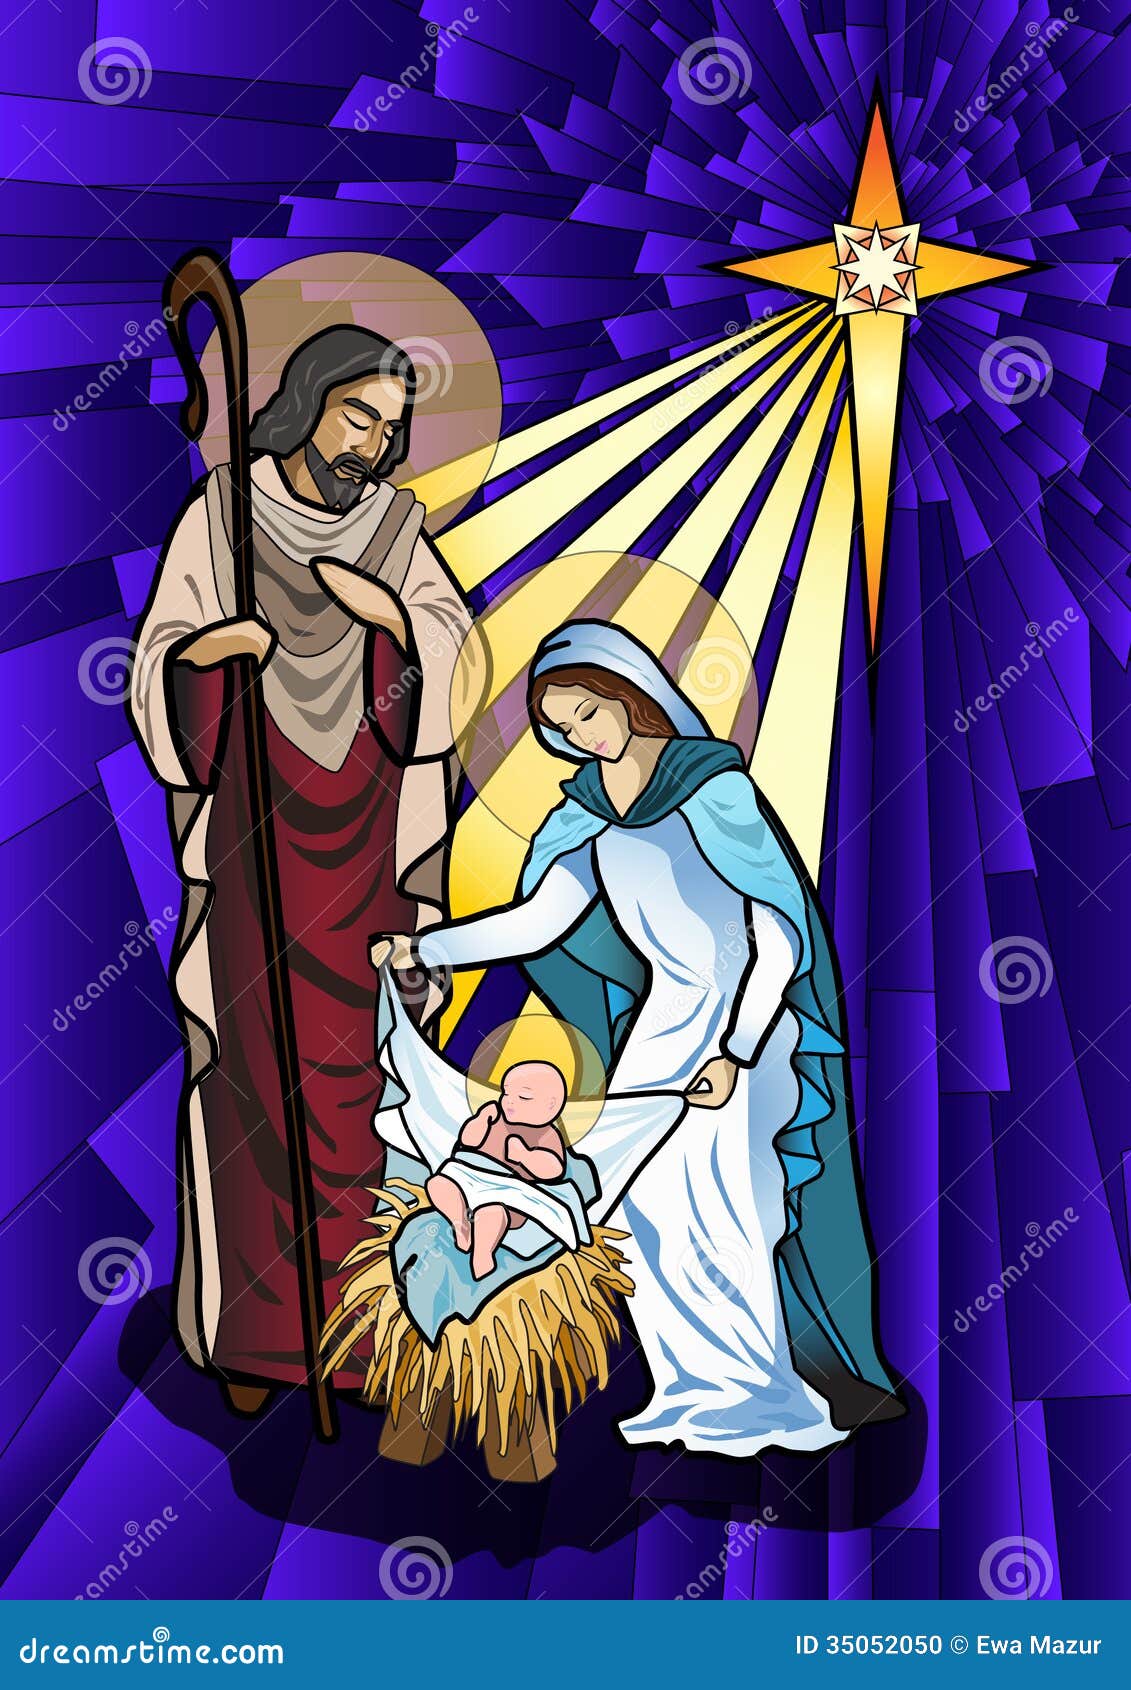 clipart of jesus birth - photo #30